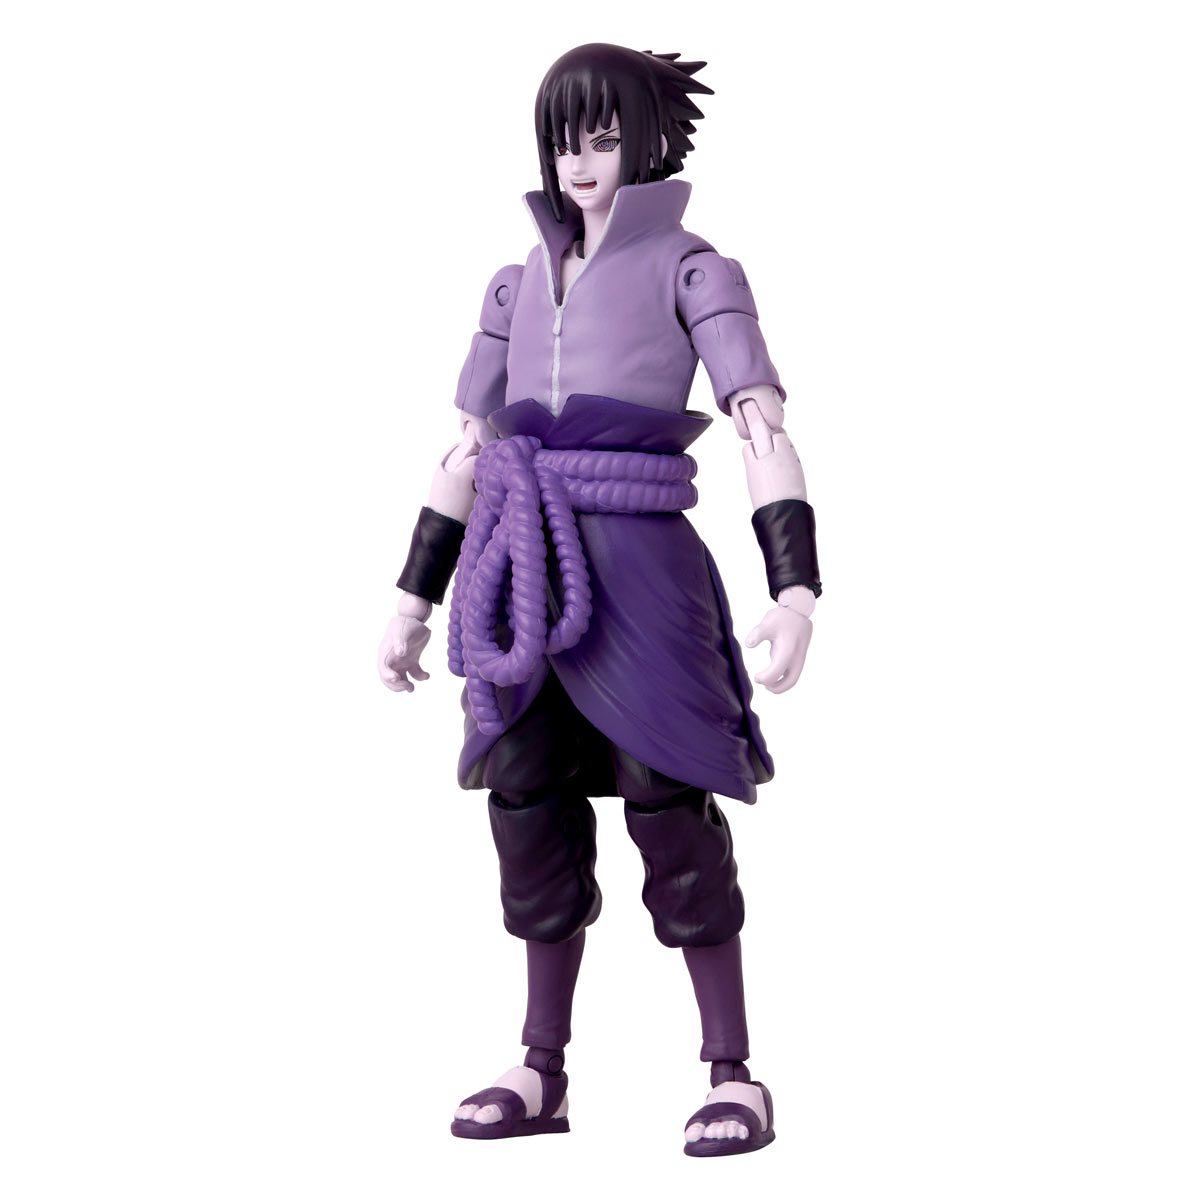 ANIME HEROES - Naruto - Sasuke Uchiha Action Figure